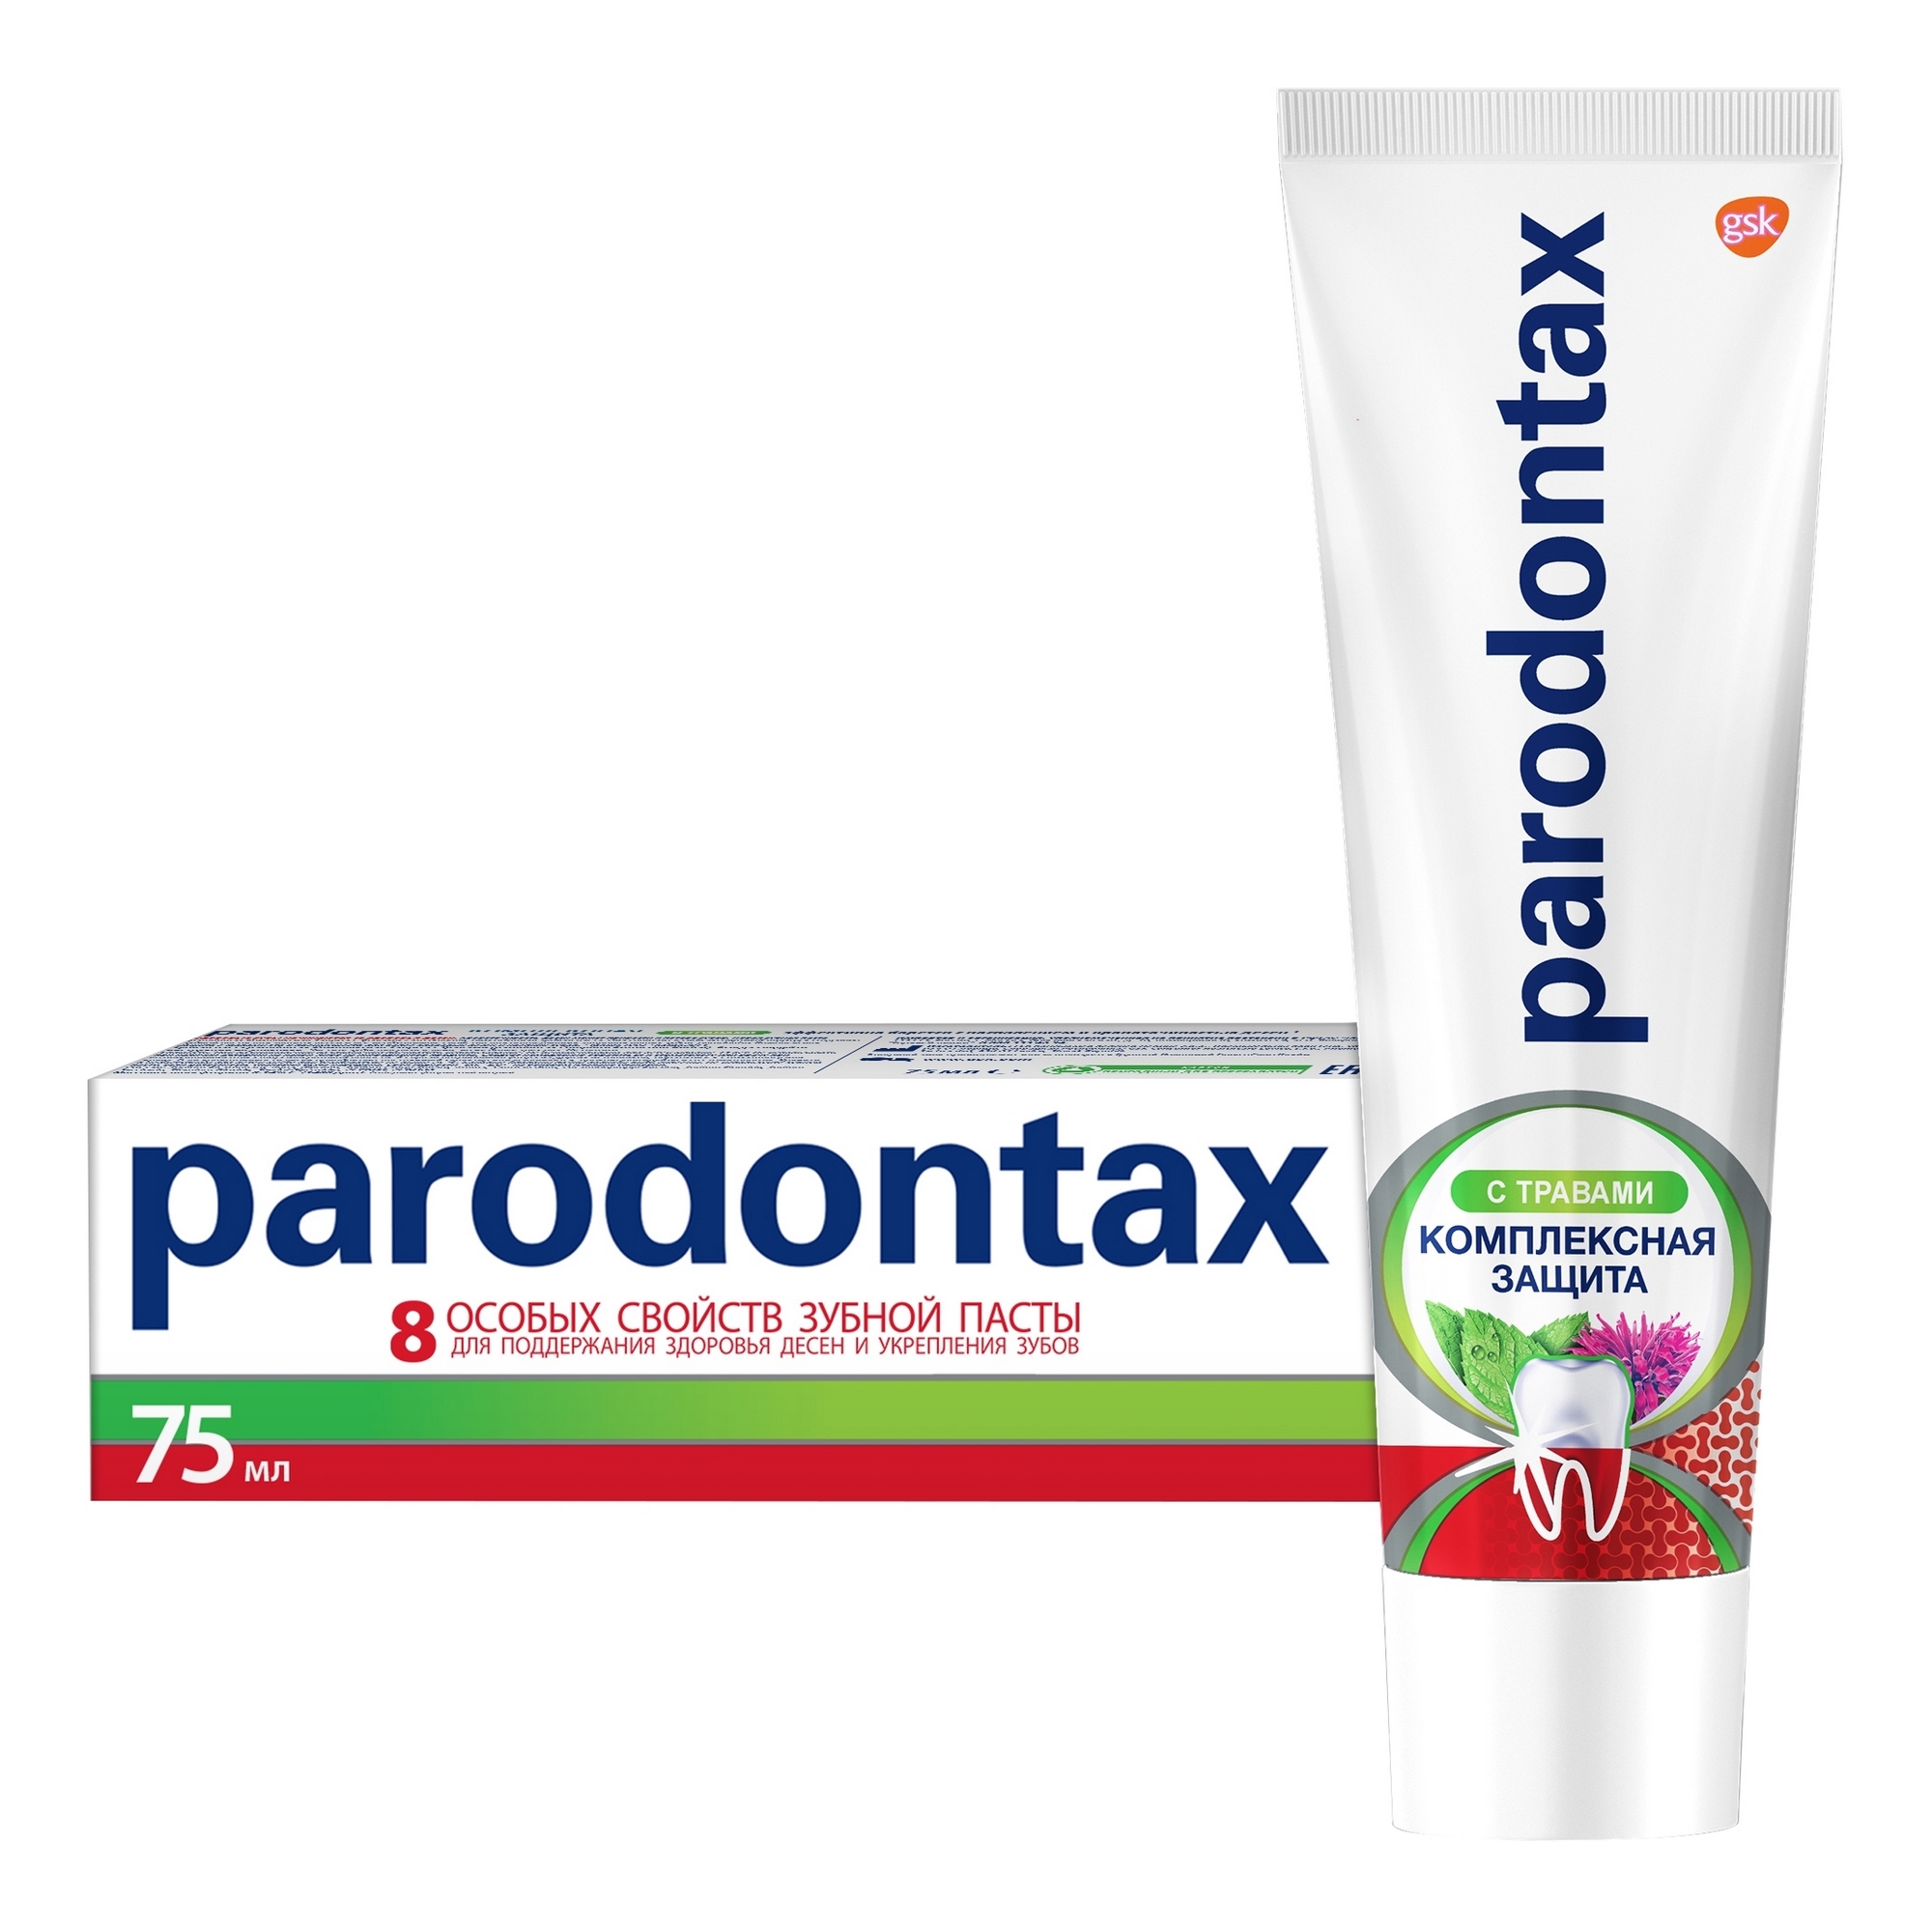 цена Зубная паста Parodontax Комплексная защита с травами 75 мл